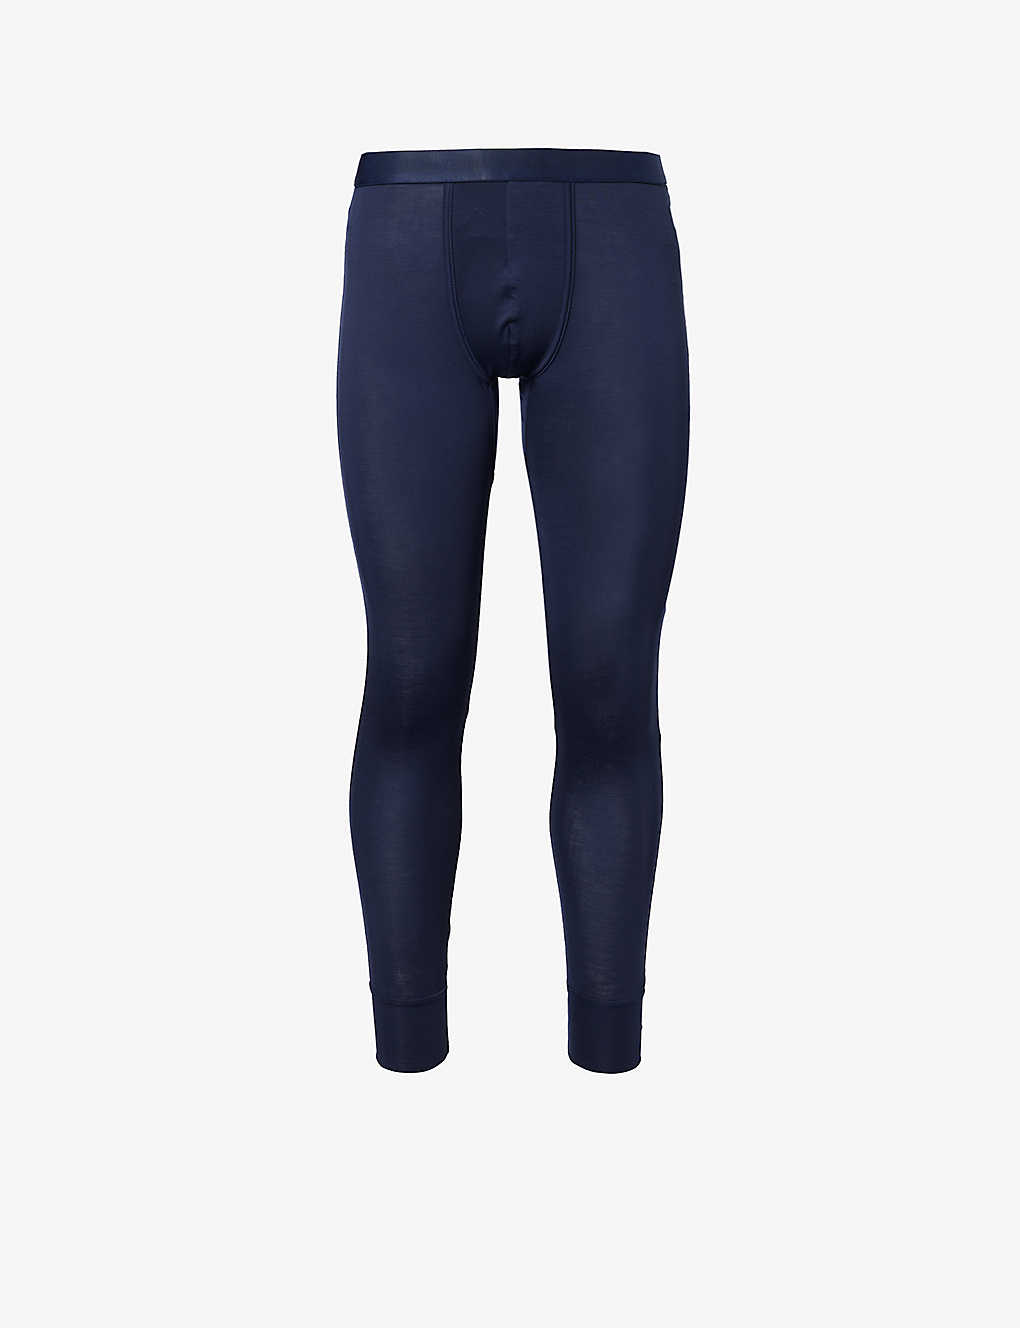 Cdlp Mens Navy Blue Branded-waistband Stretch-woven Long Johns